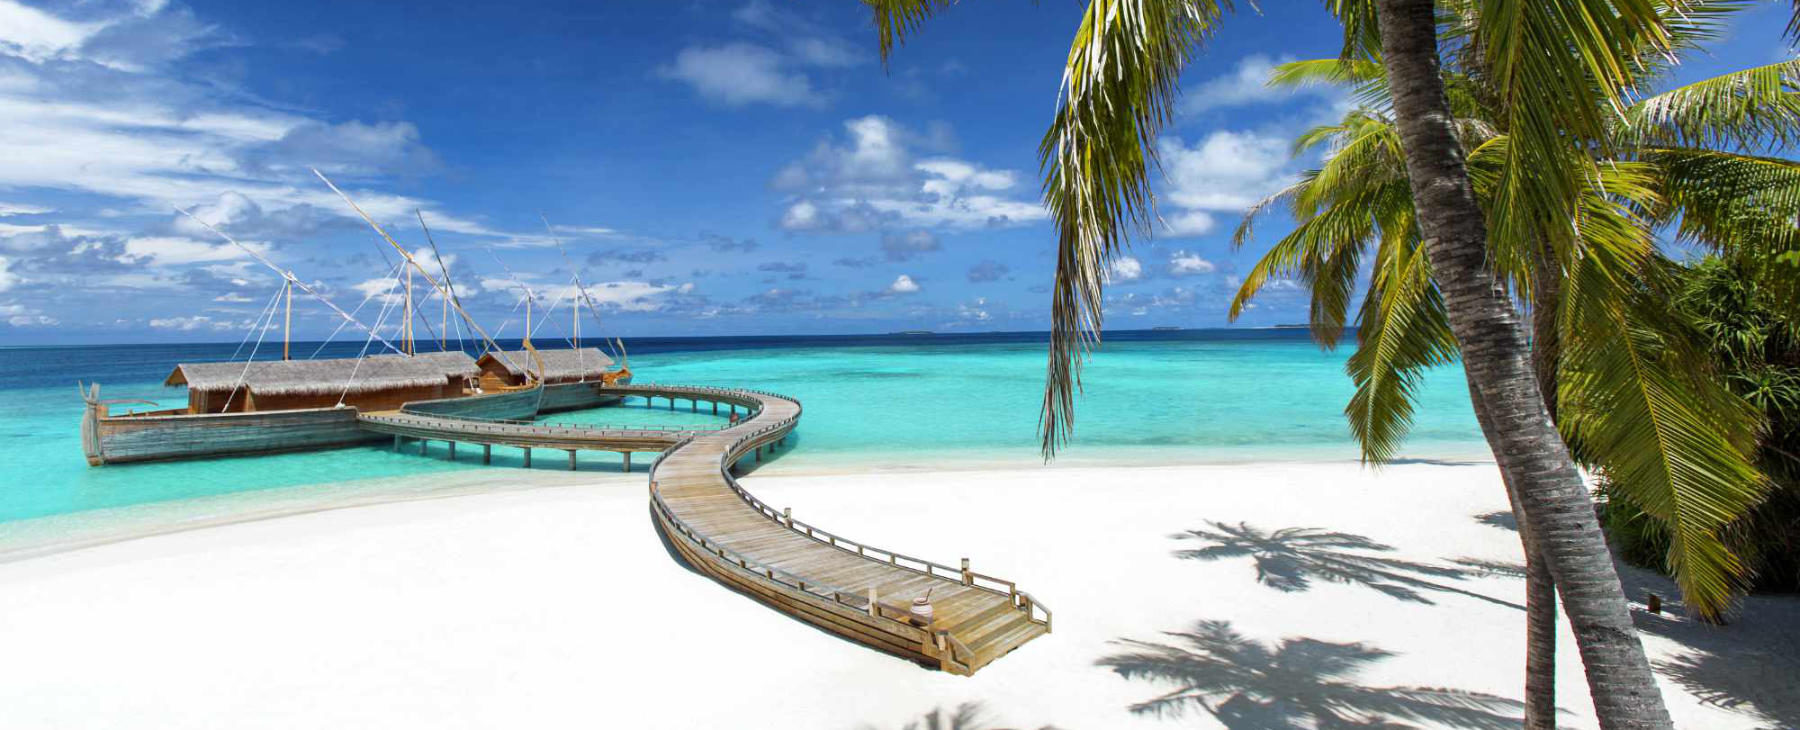 Luxusreise Malediven Milaidhoo